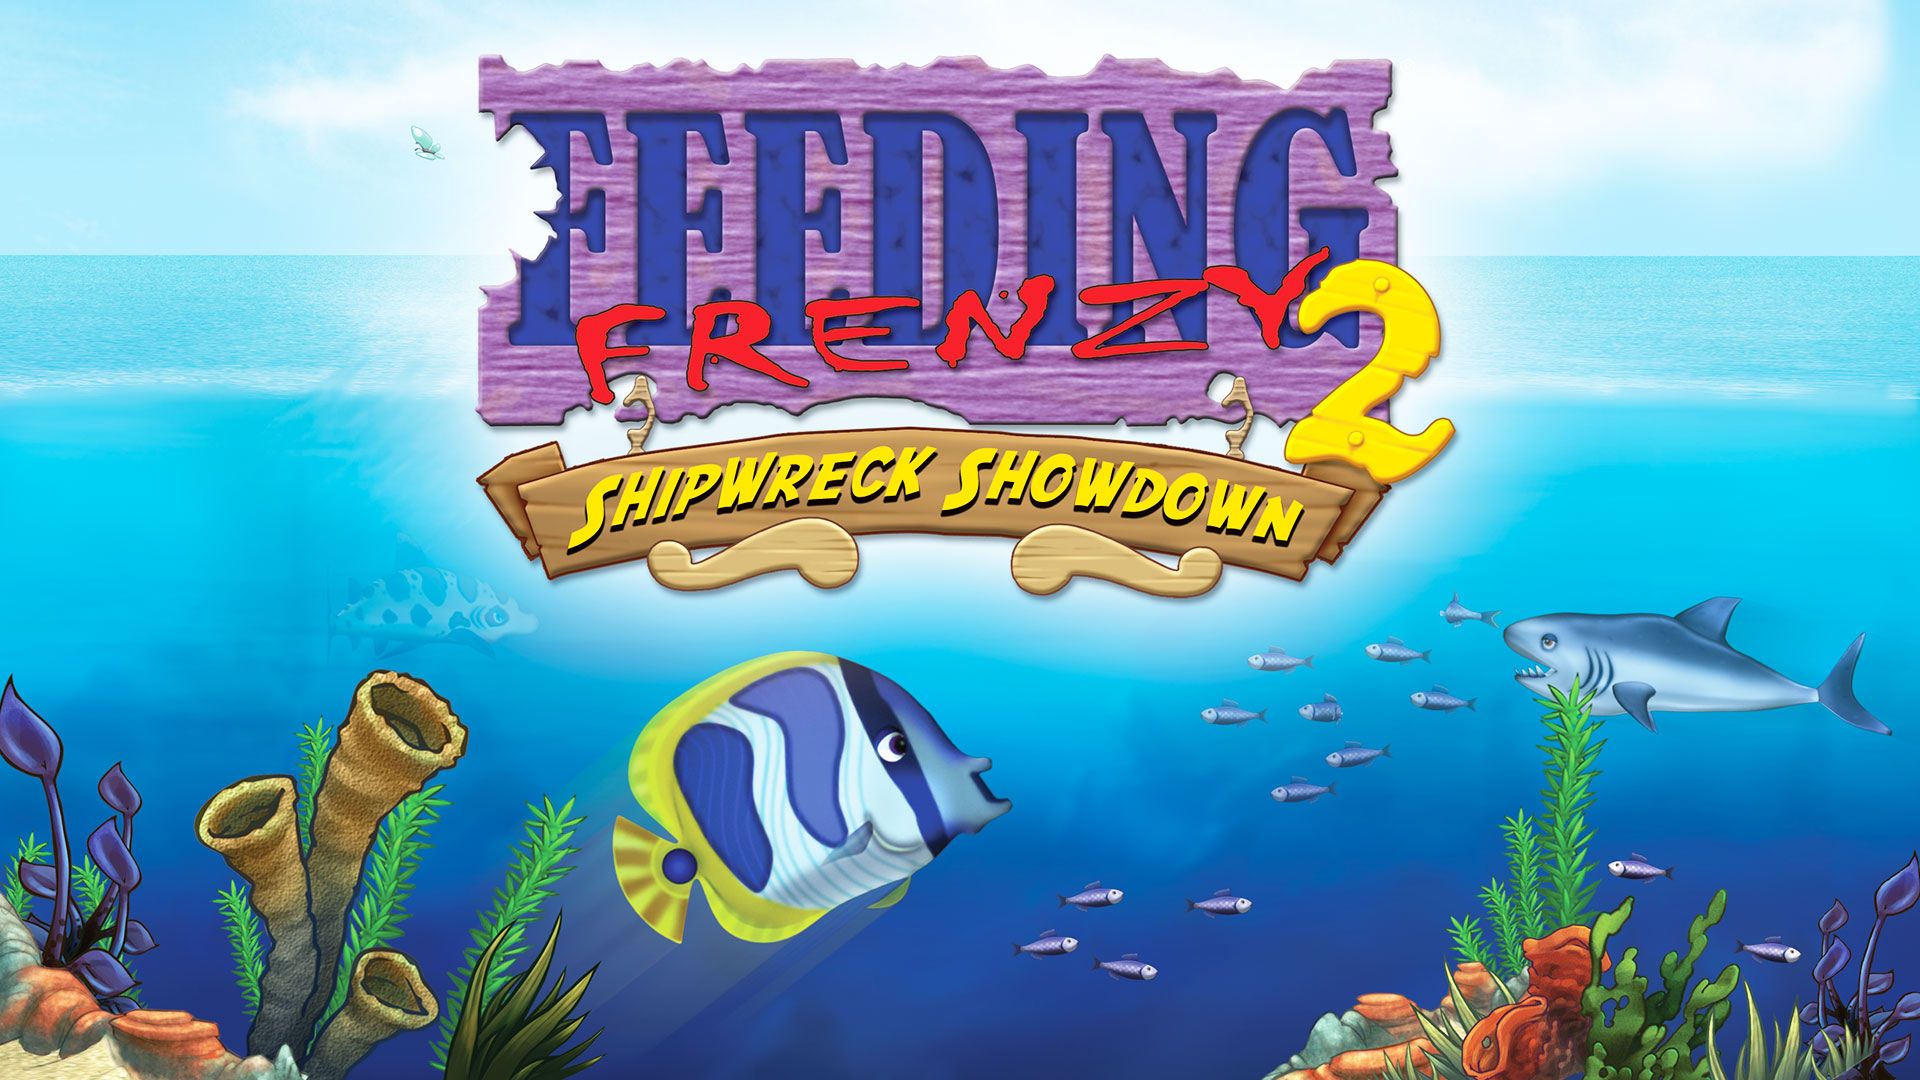 feeding frenzy 2 game free